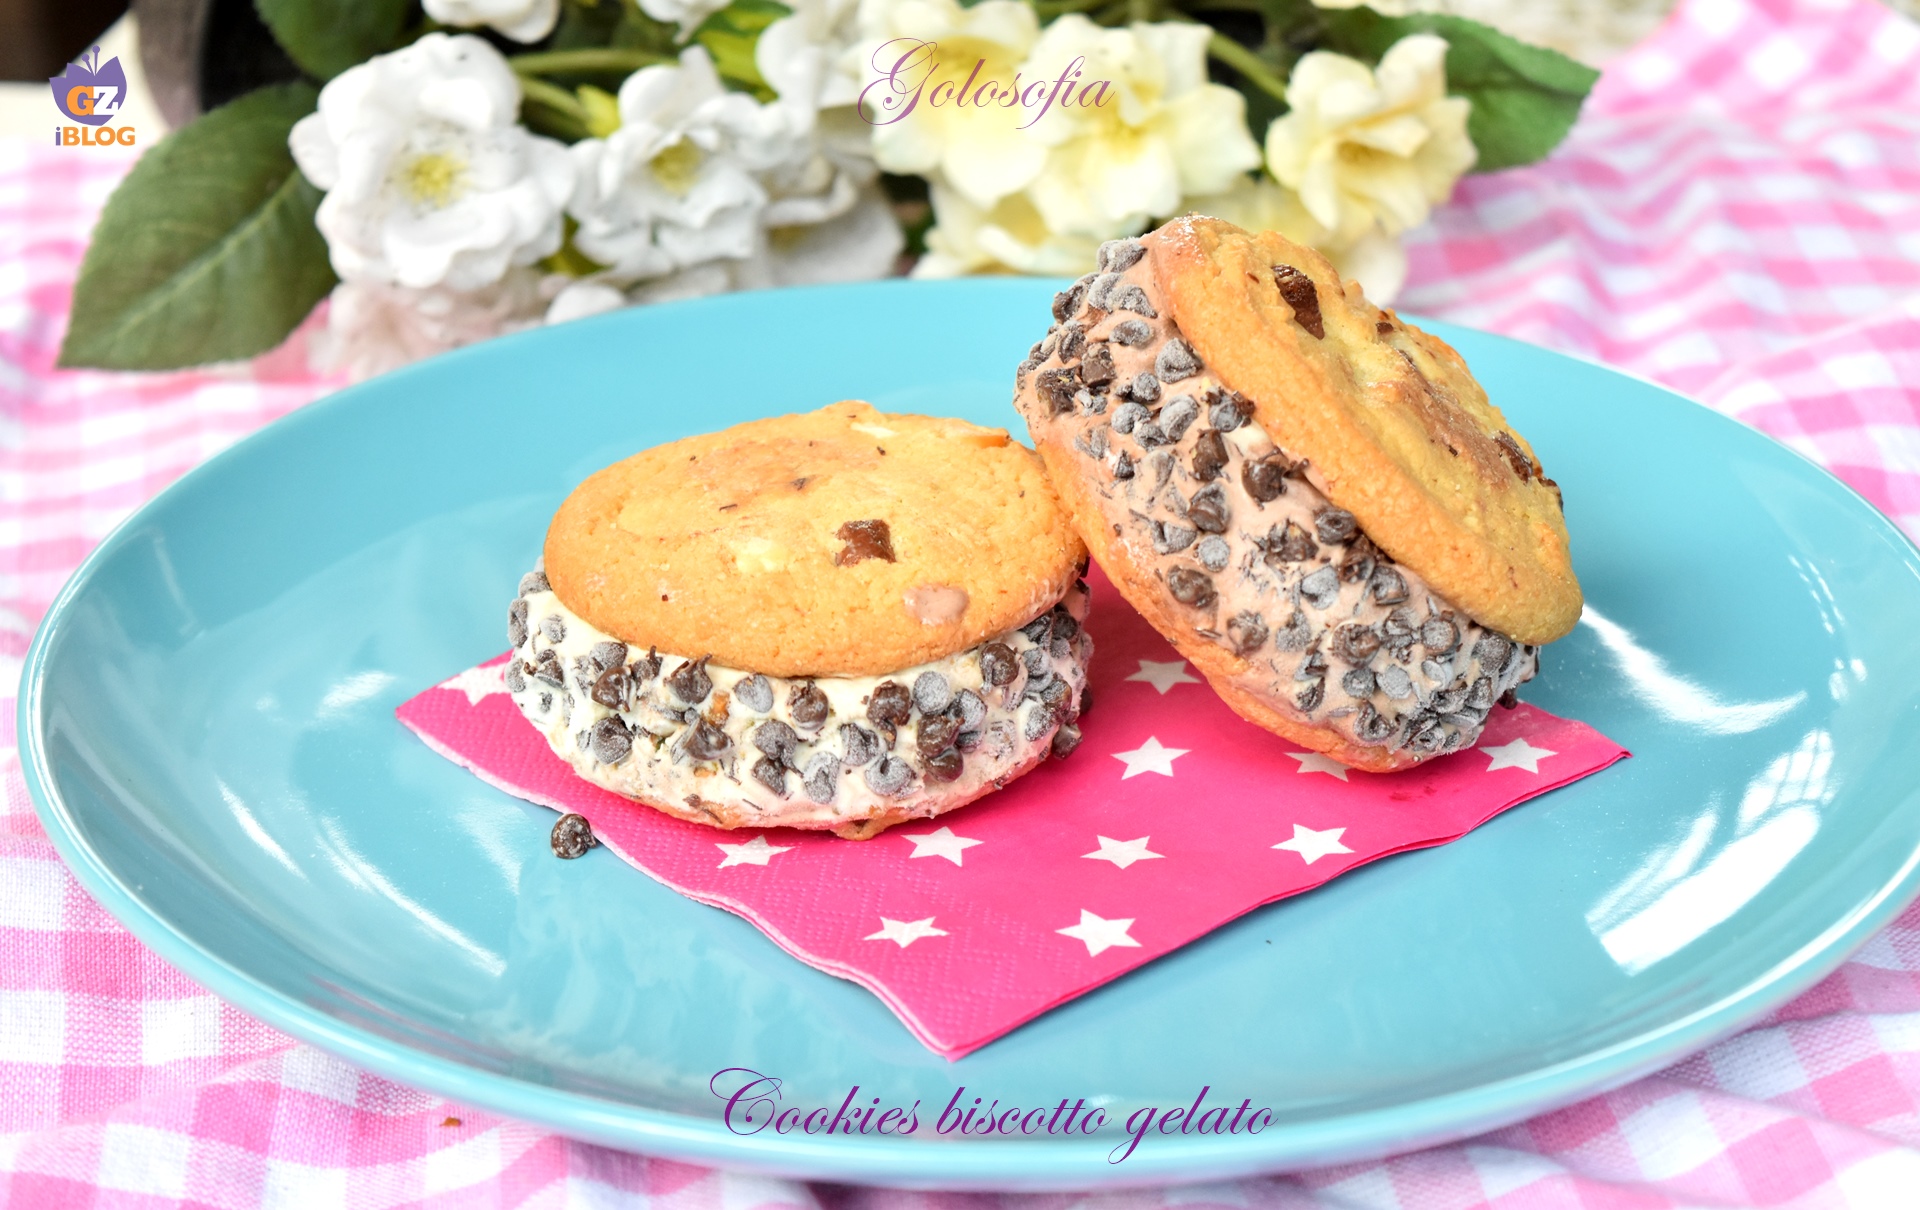 Cookies biscotto gelato-ricetta dolci-golosofia